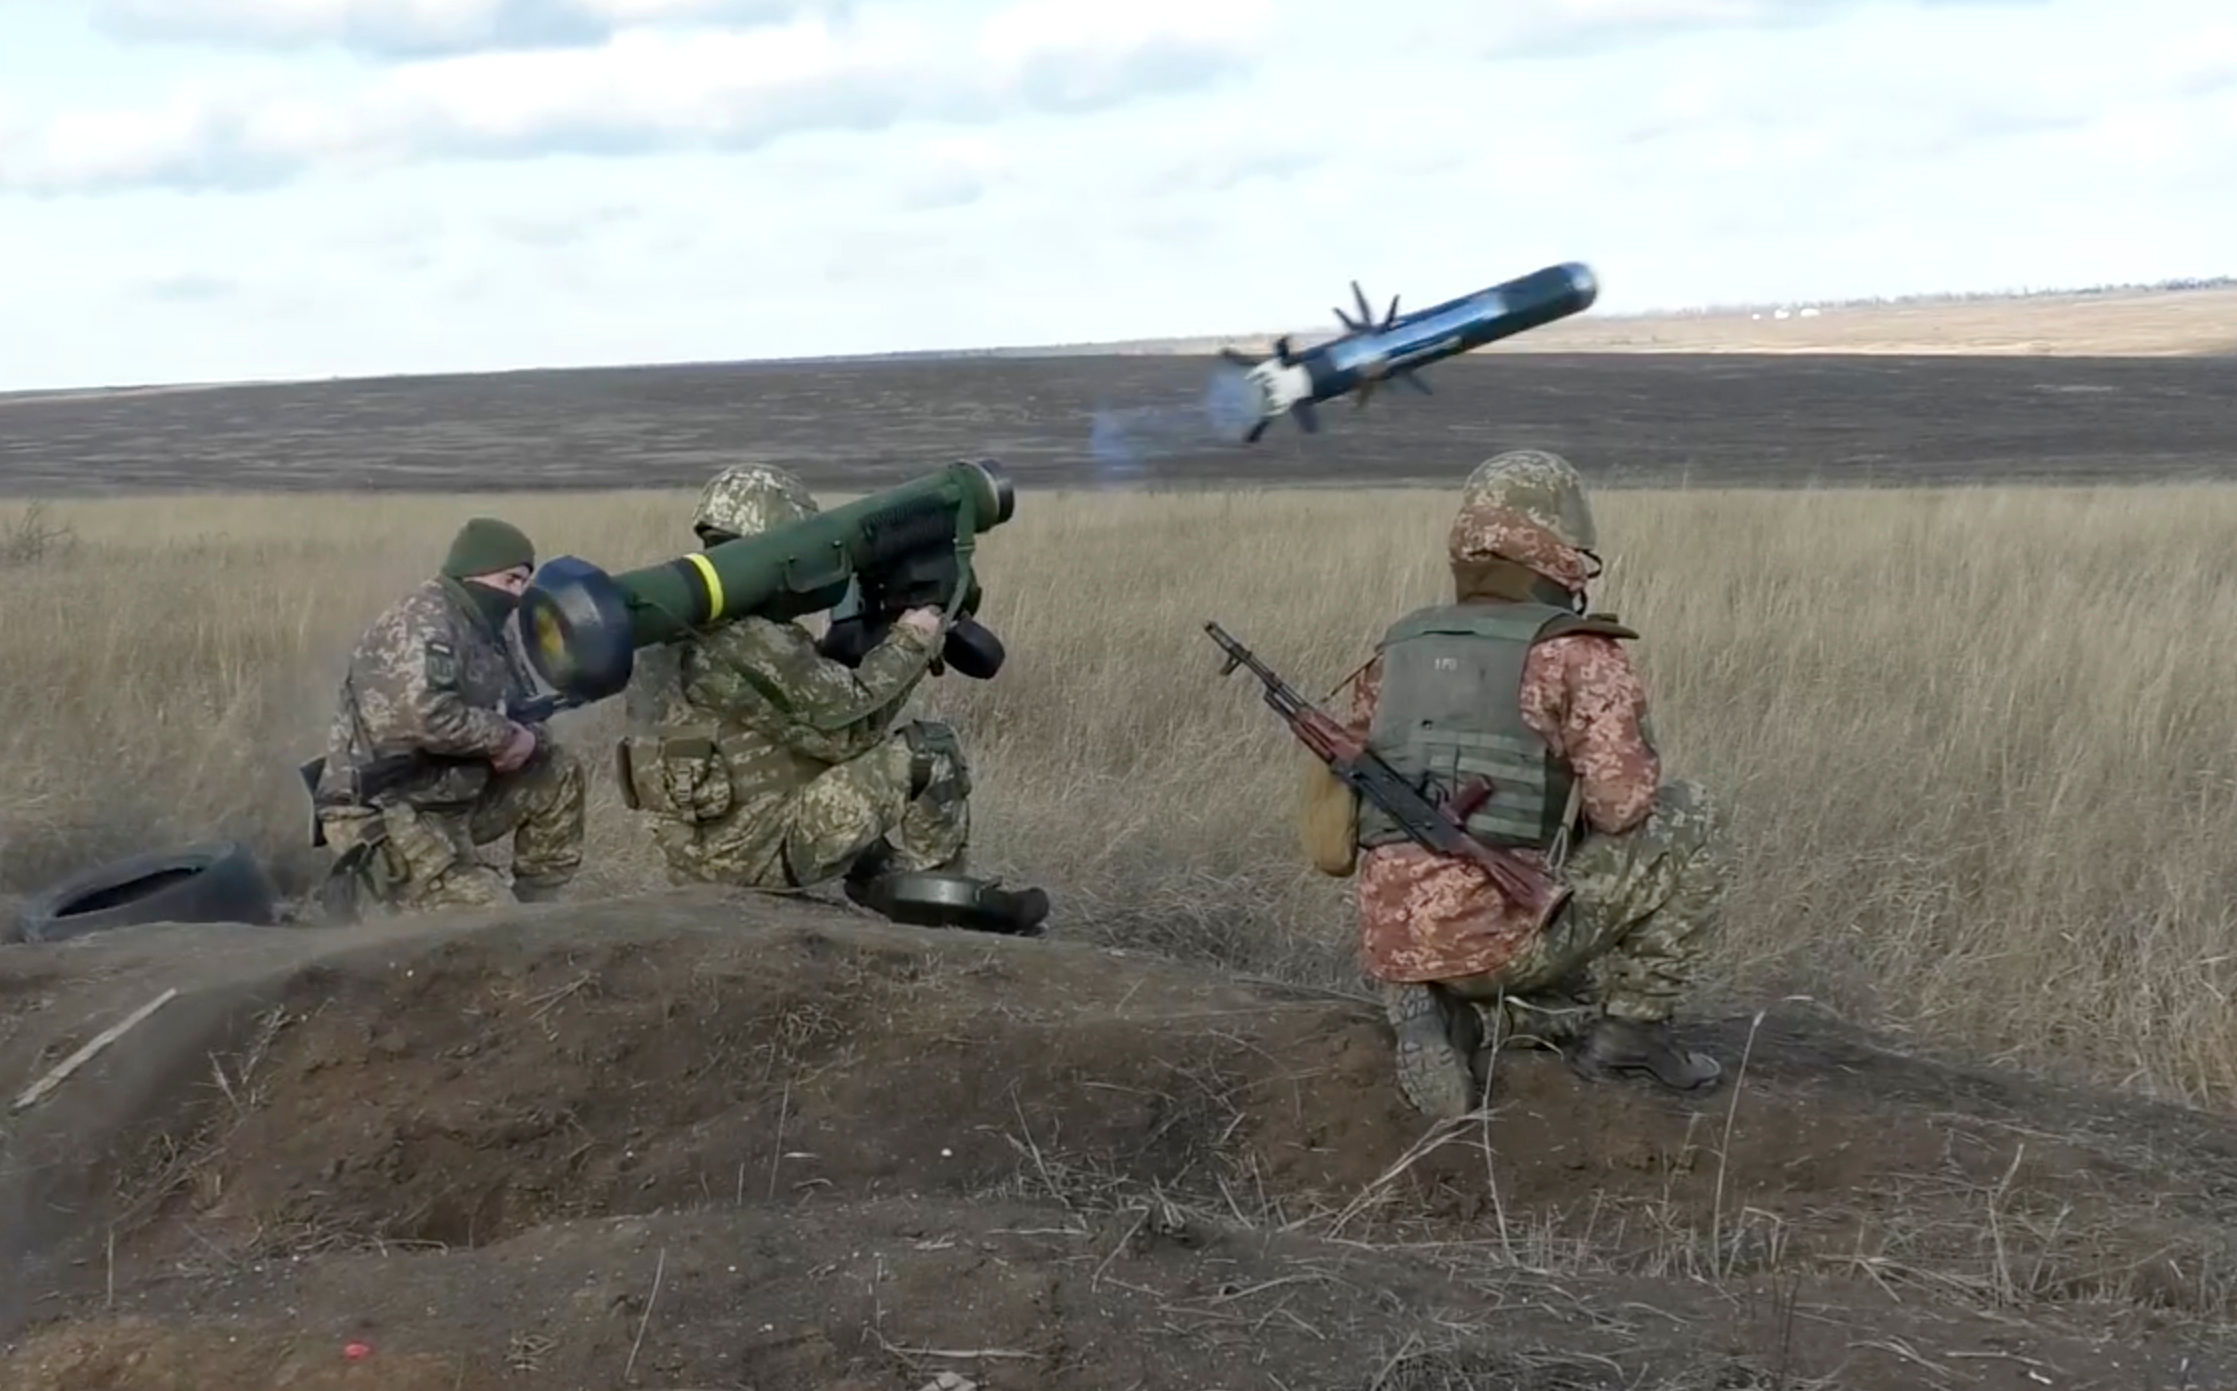 CIA trained Ukrainian squads to launch anti-Russian insurgency: Report